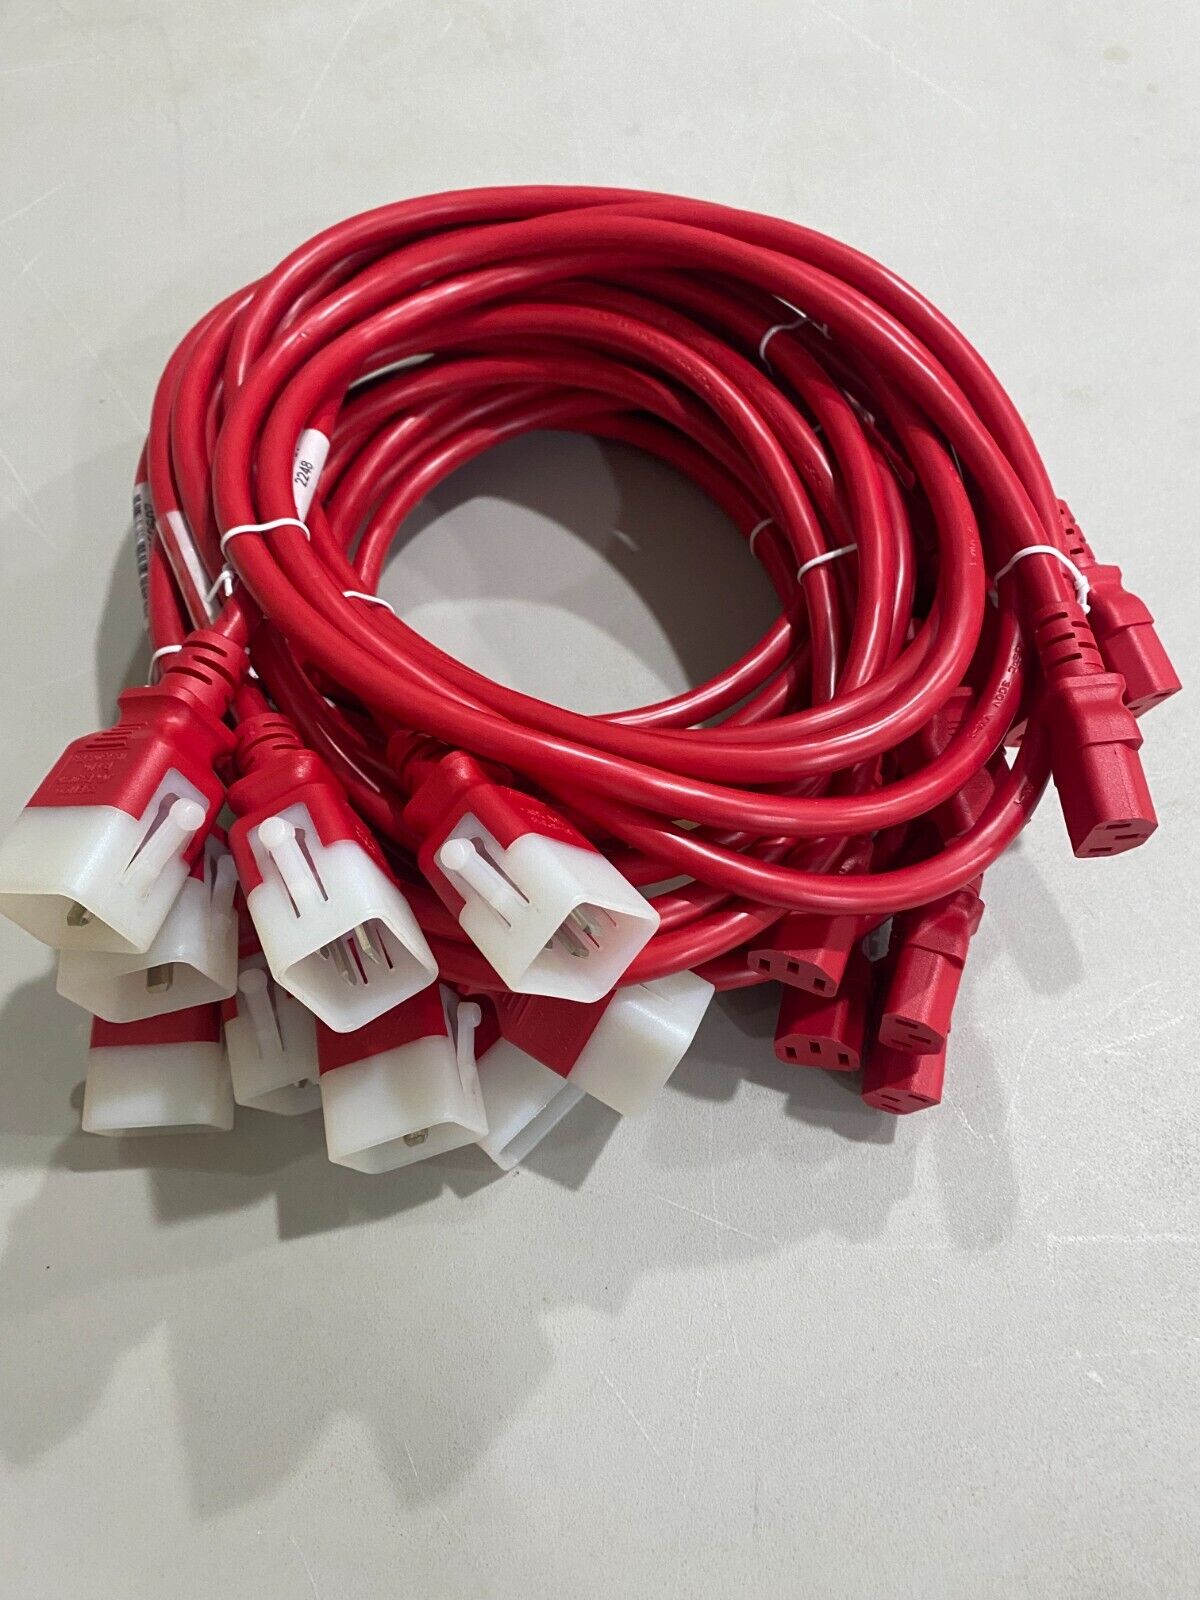 Lot of 10 20K13-H-072-RED 6FT P-Lock C20 to C13 15A 250V 14/3 SJT Red Power Cord